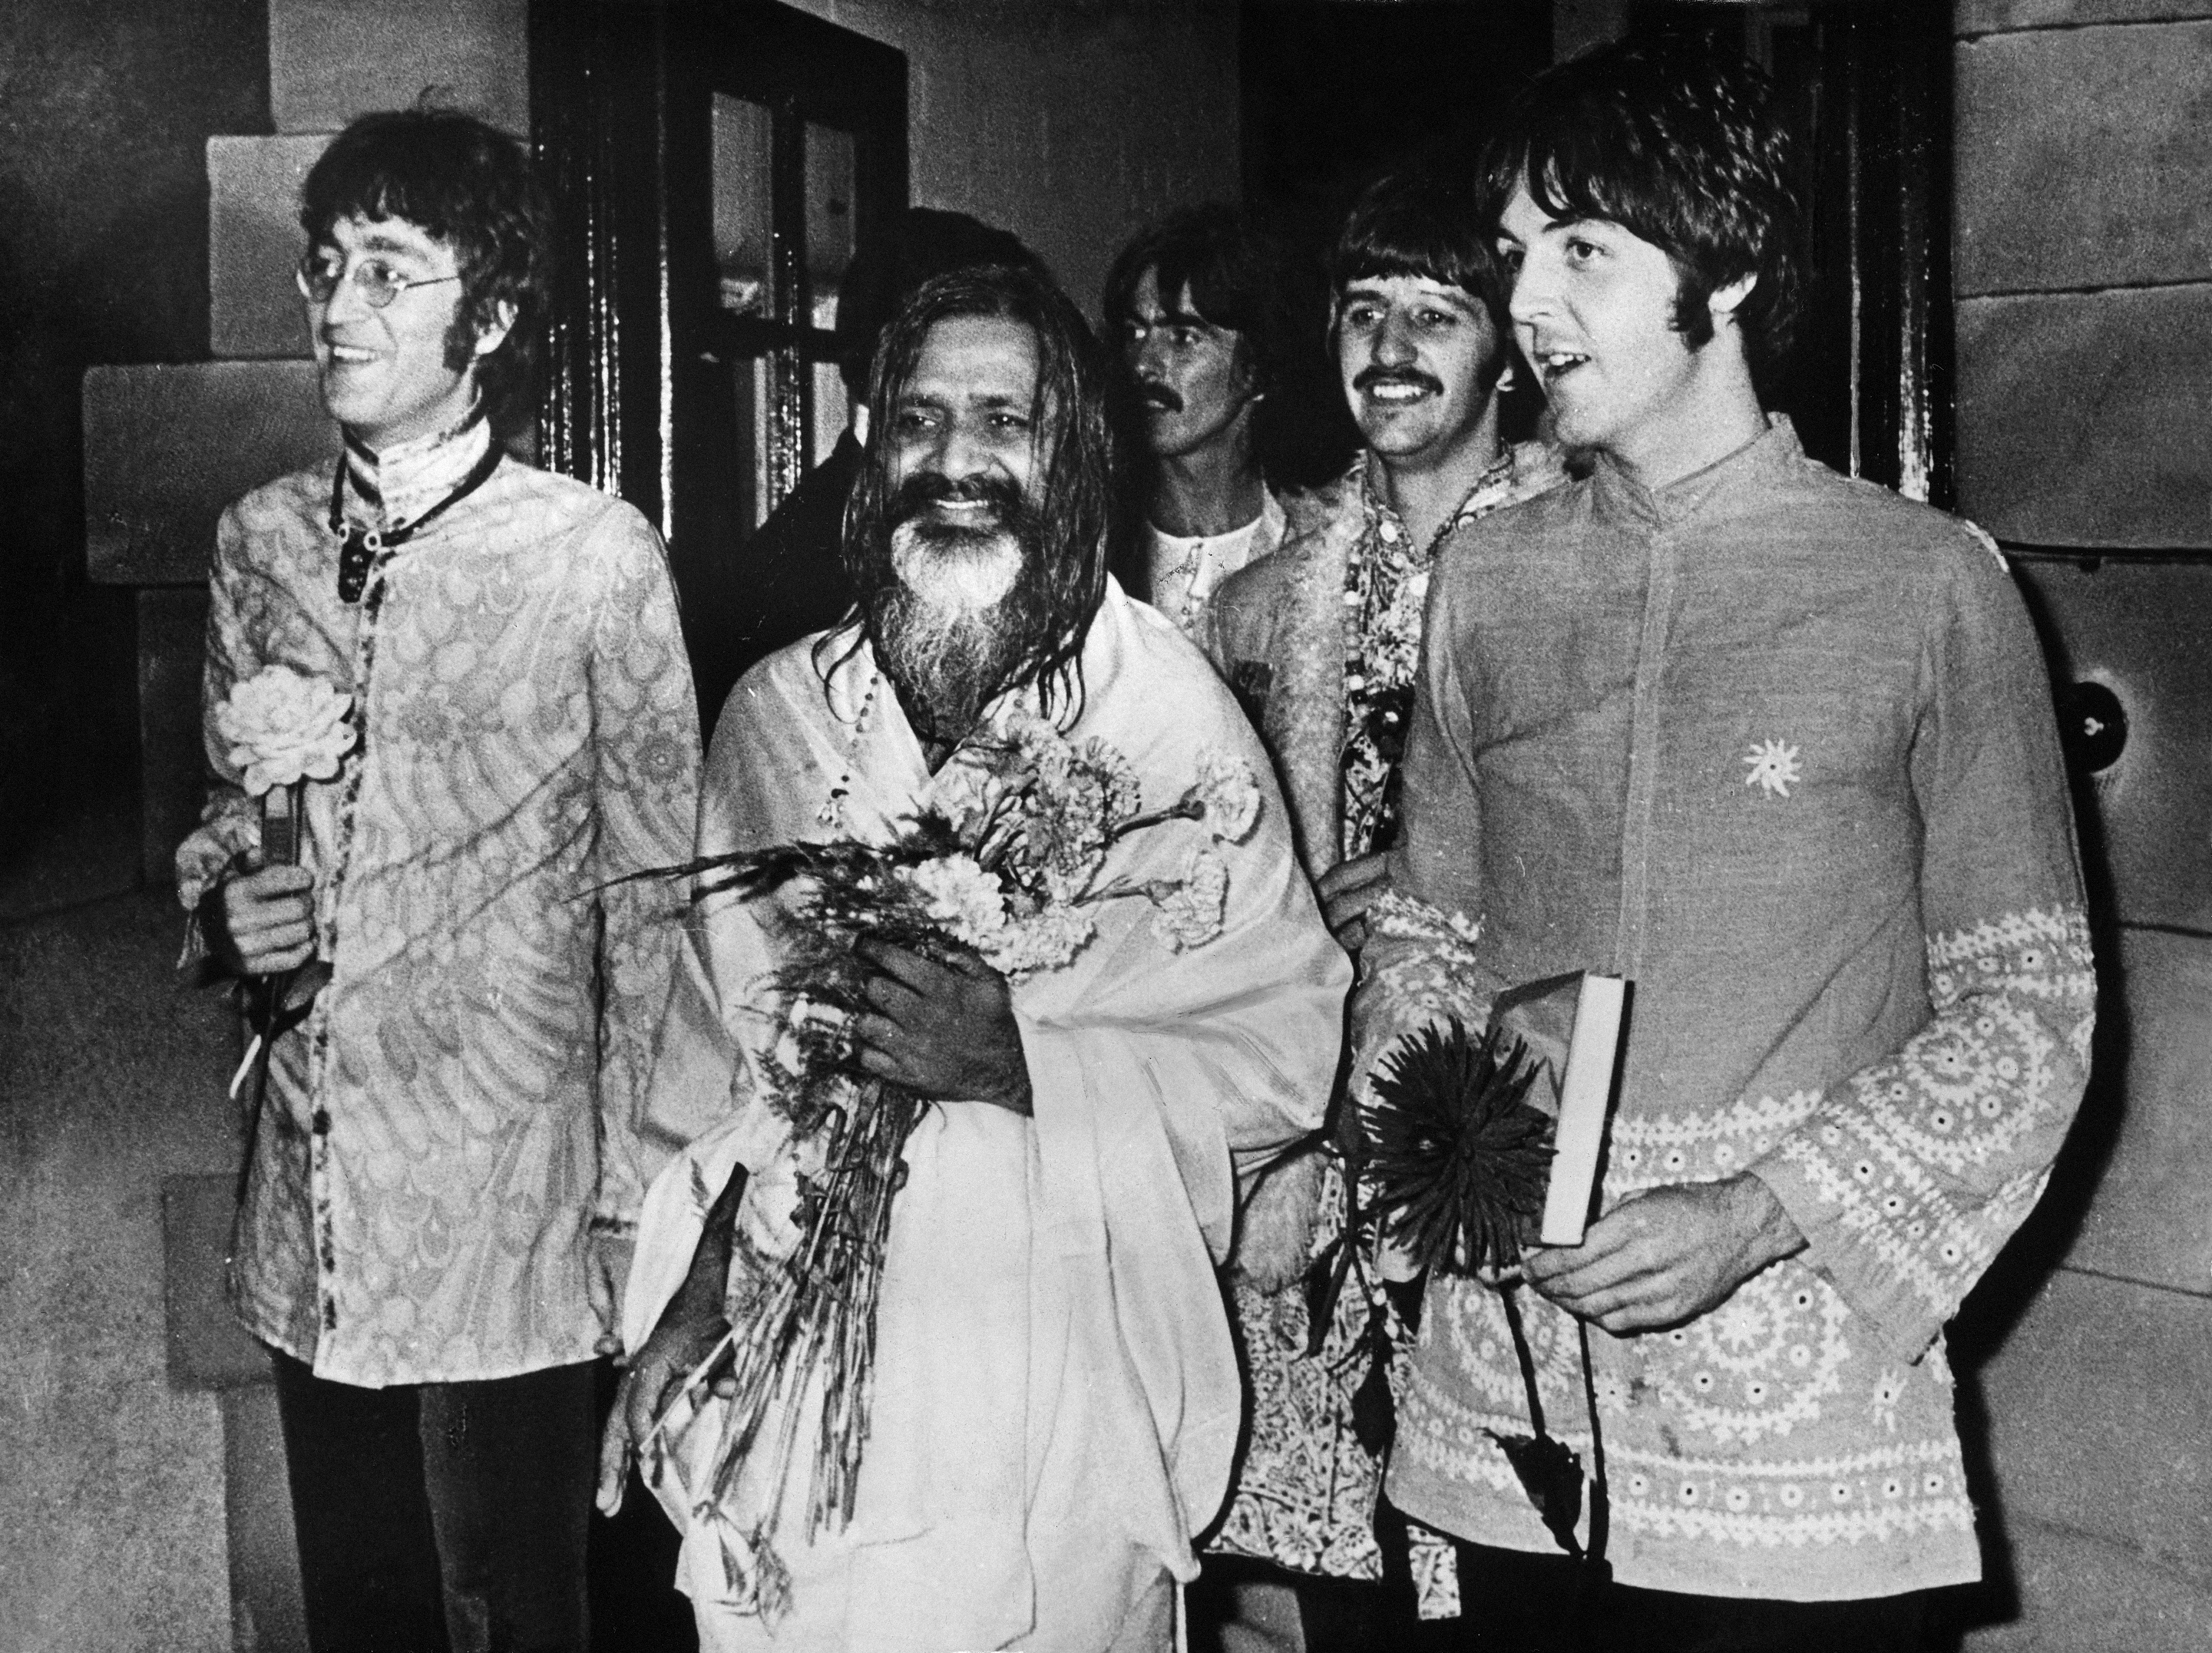 John Lennon, Maharishi Mahesh Yogi, George Harrison, Ringo Starr, and Paul McCartney